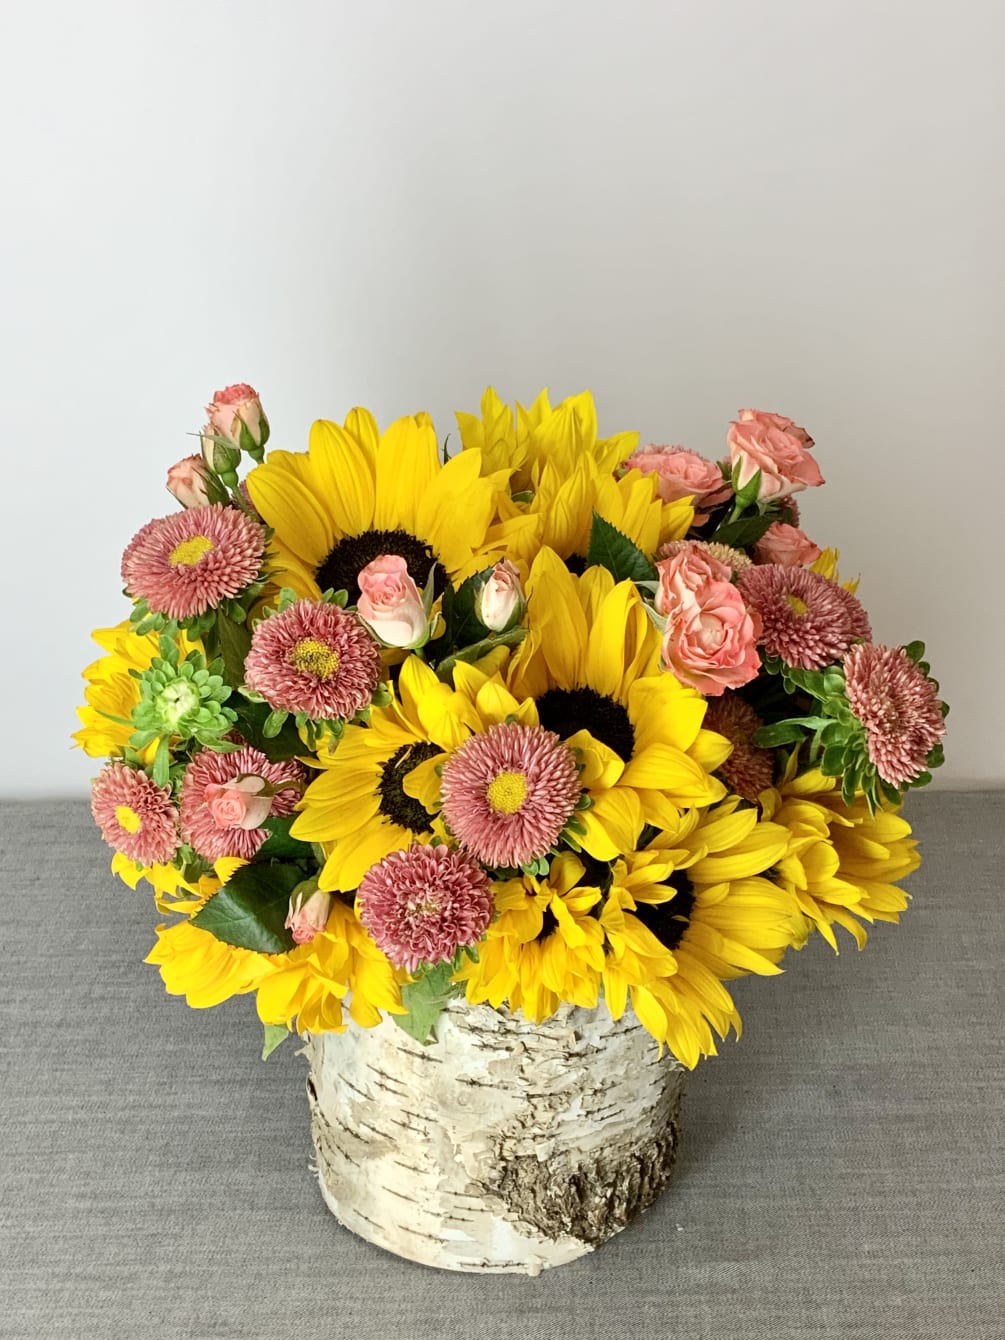 Amazing beauty of sunflowers in an arrangement.